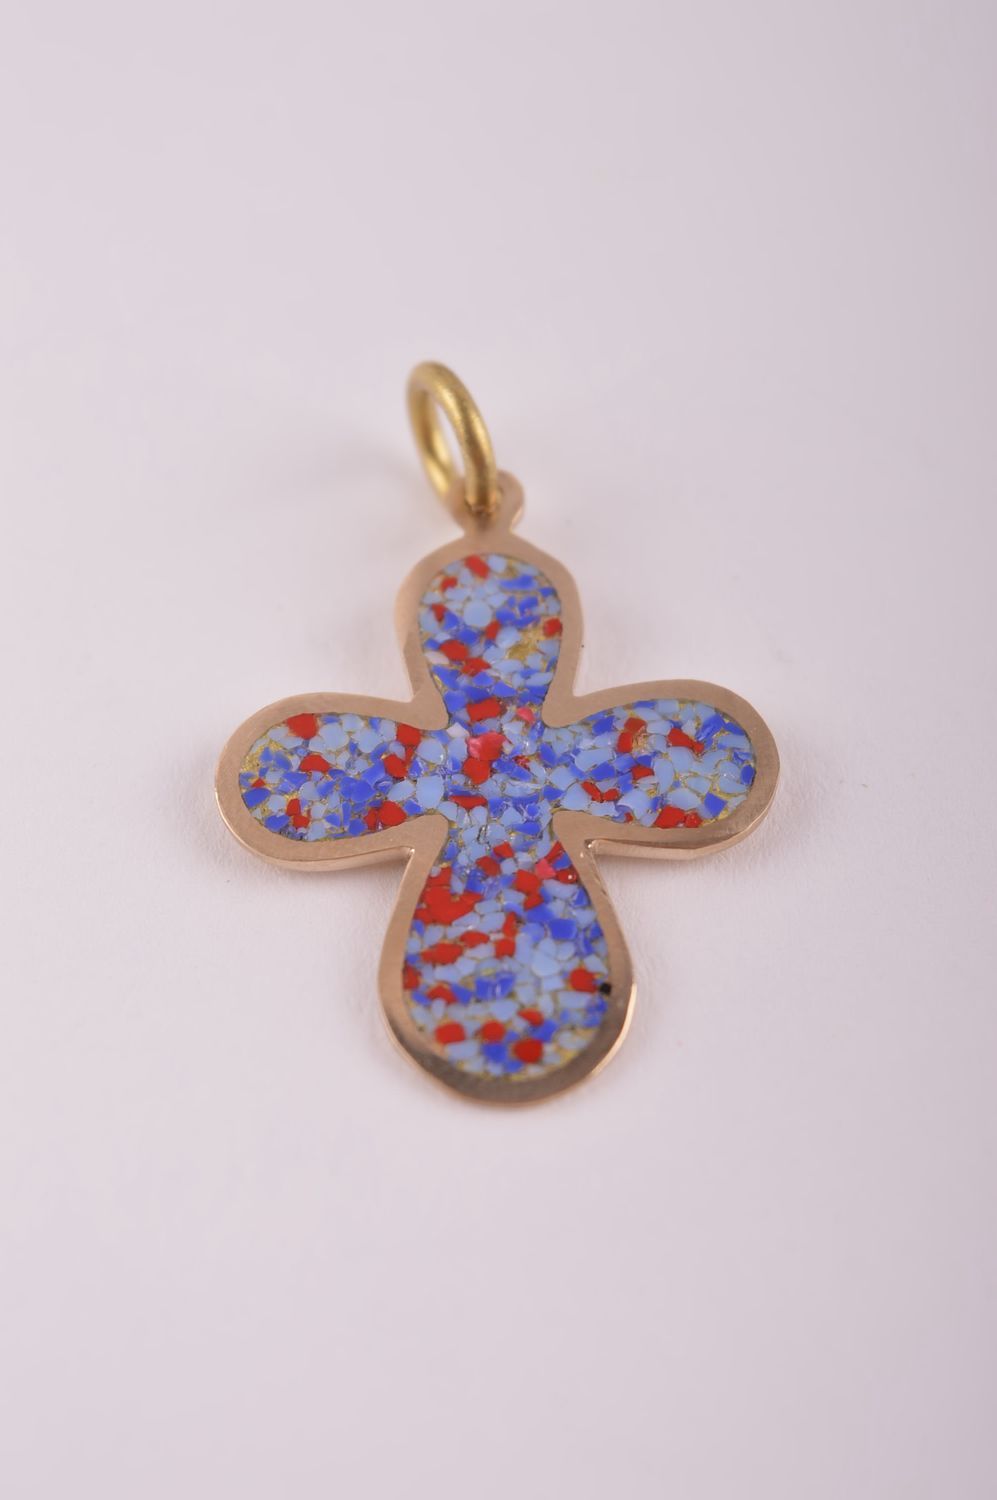 Unusual handmade cross pendant metal craft gemstone pendant jewelry designs photo 2